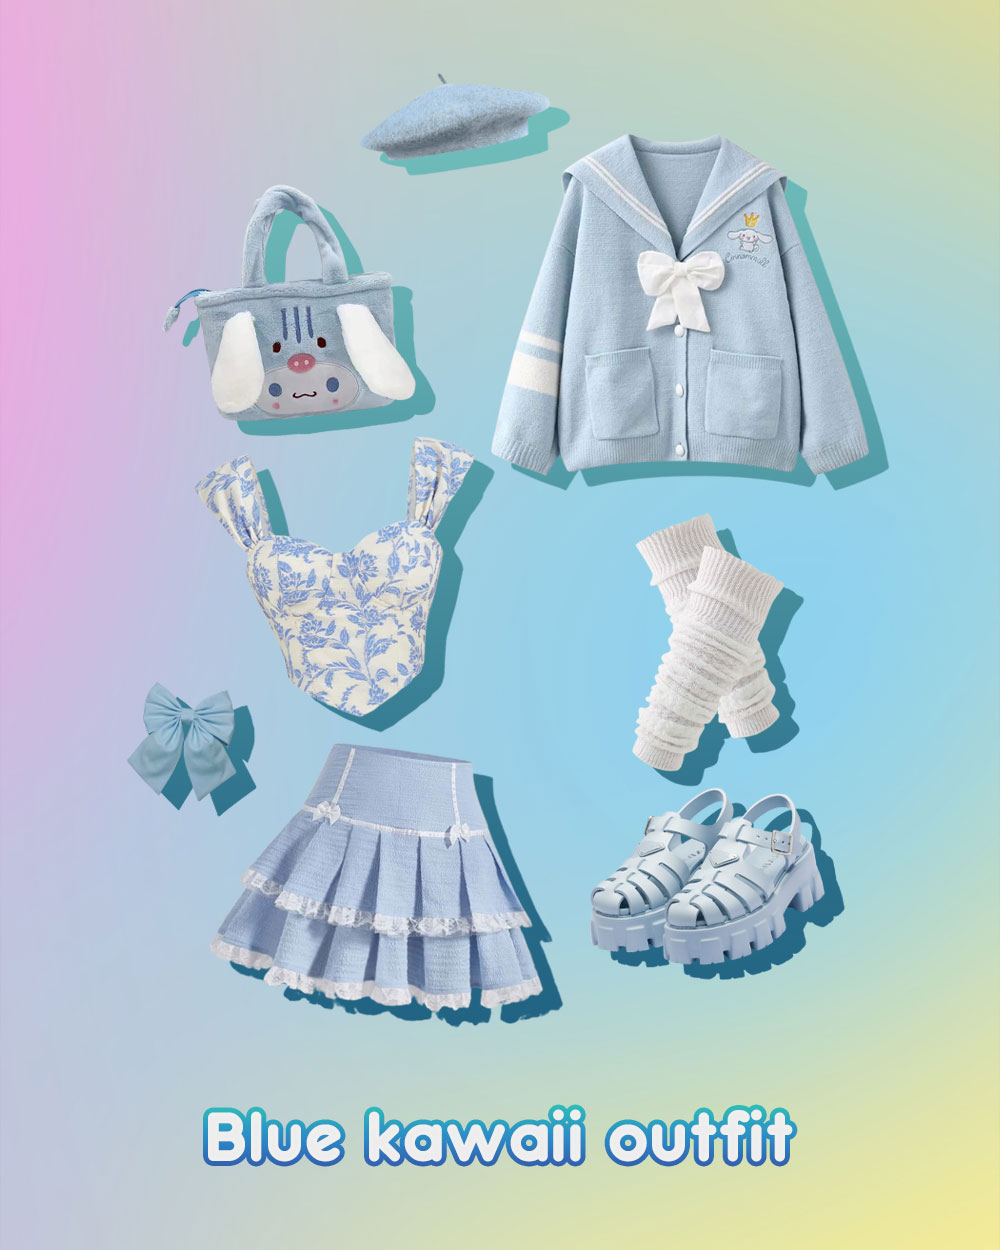 Blue kawaii outfit inspiration - sailor cardigan, handbag, corset, legwarmer, bow, pleated miniskirt, platform sandals